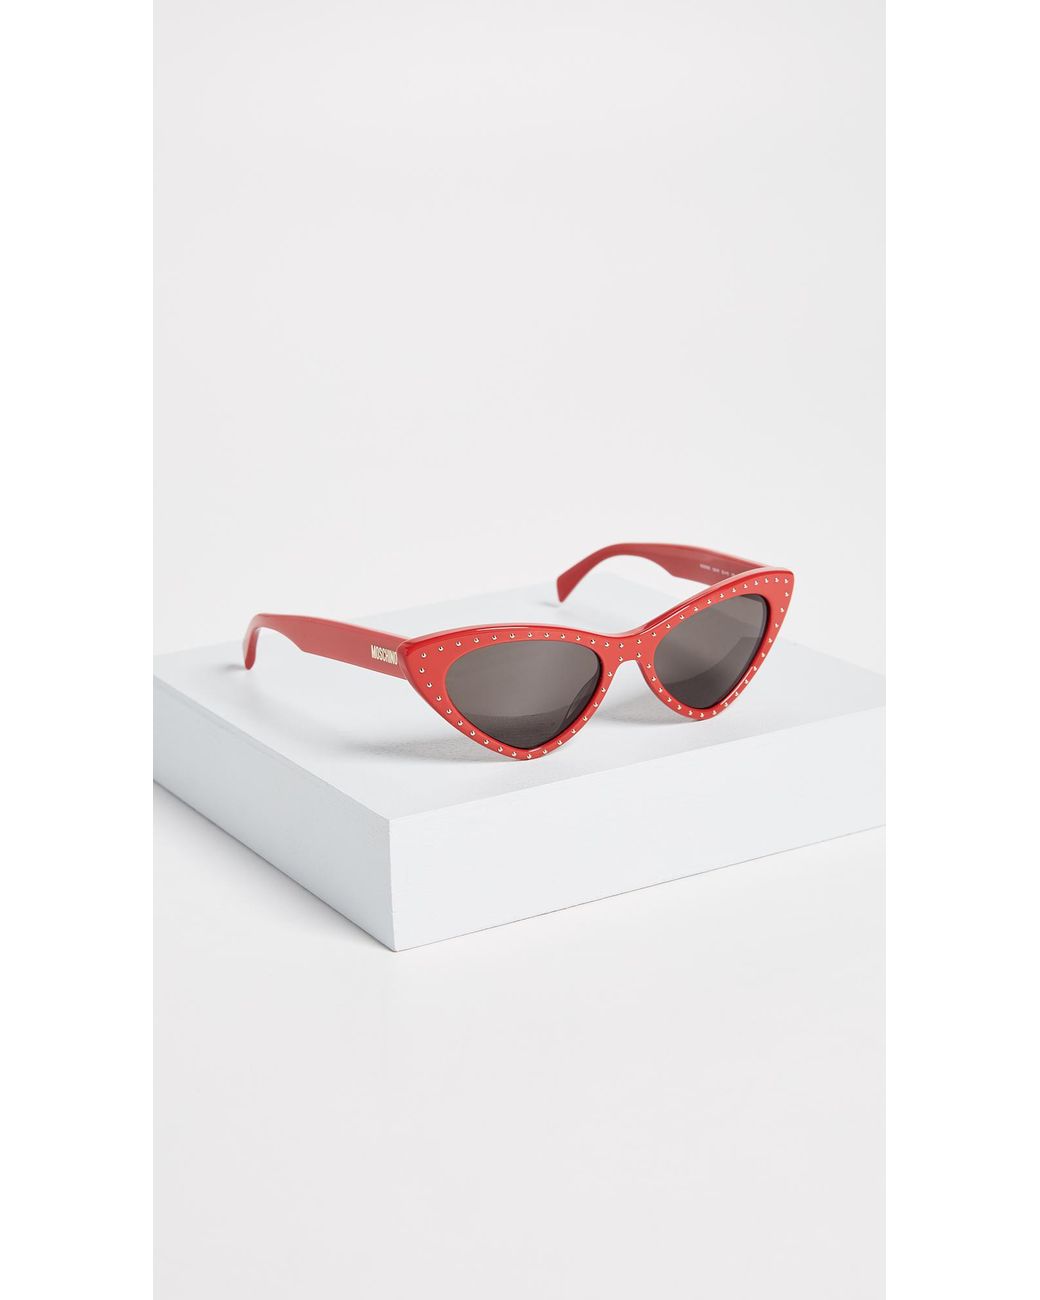 Moschino NEW Moschino Sunglasses Women Red Cat Eye Lens Frames Gradient Rectangle Lens 